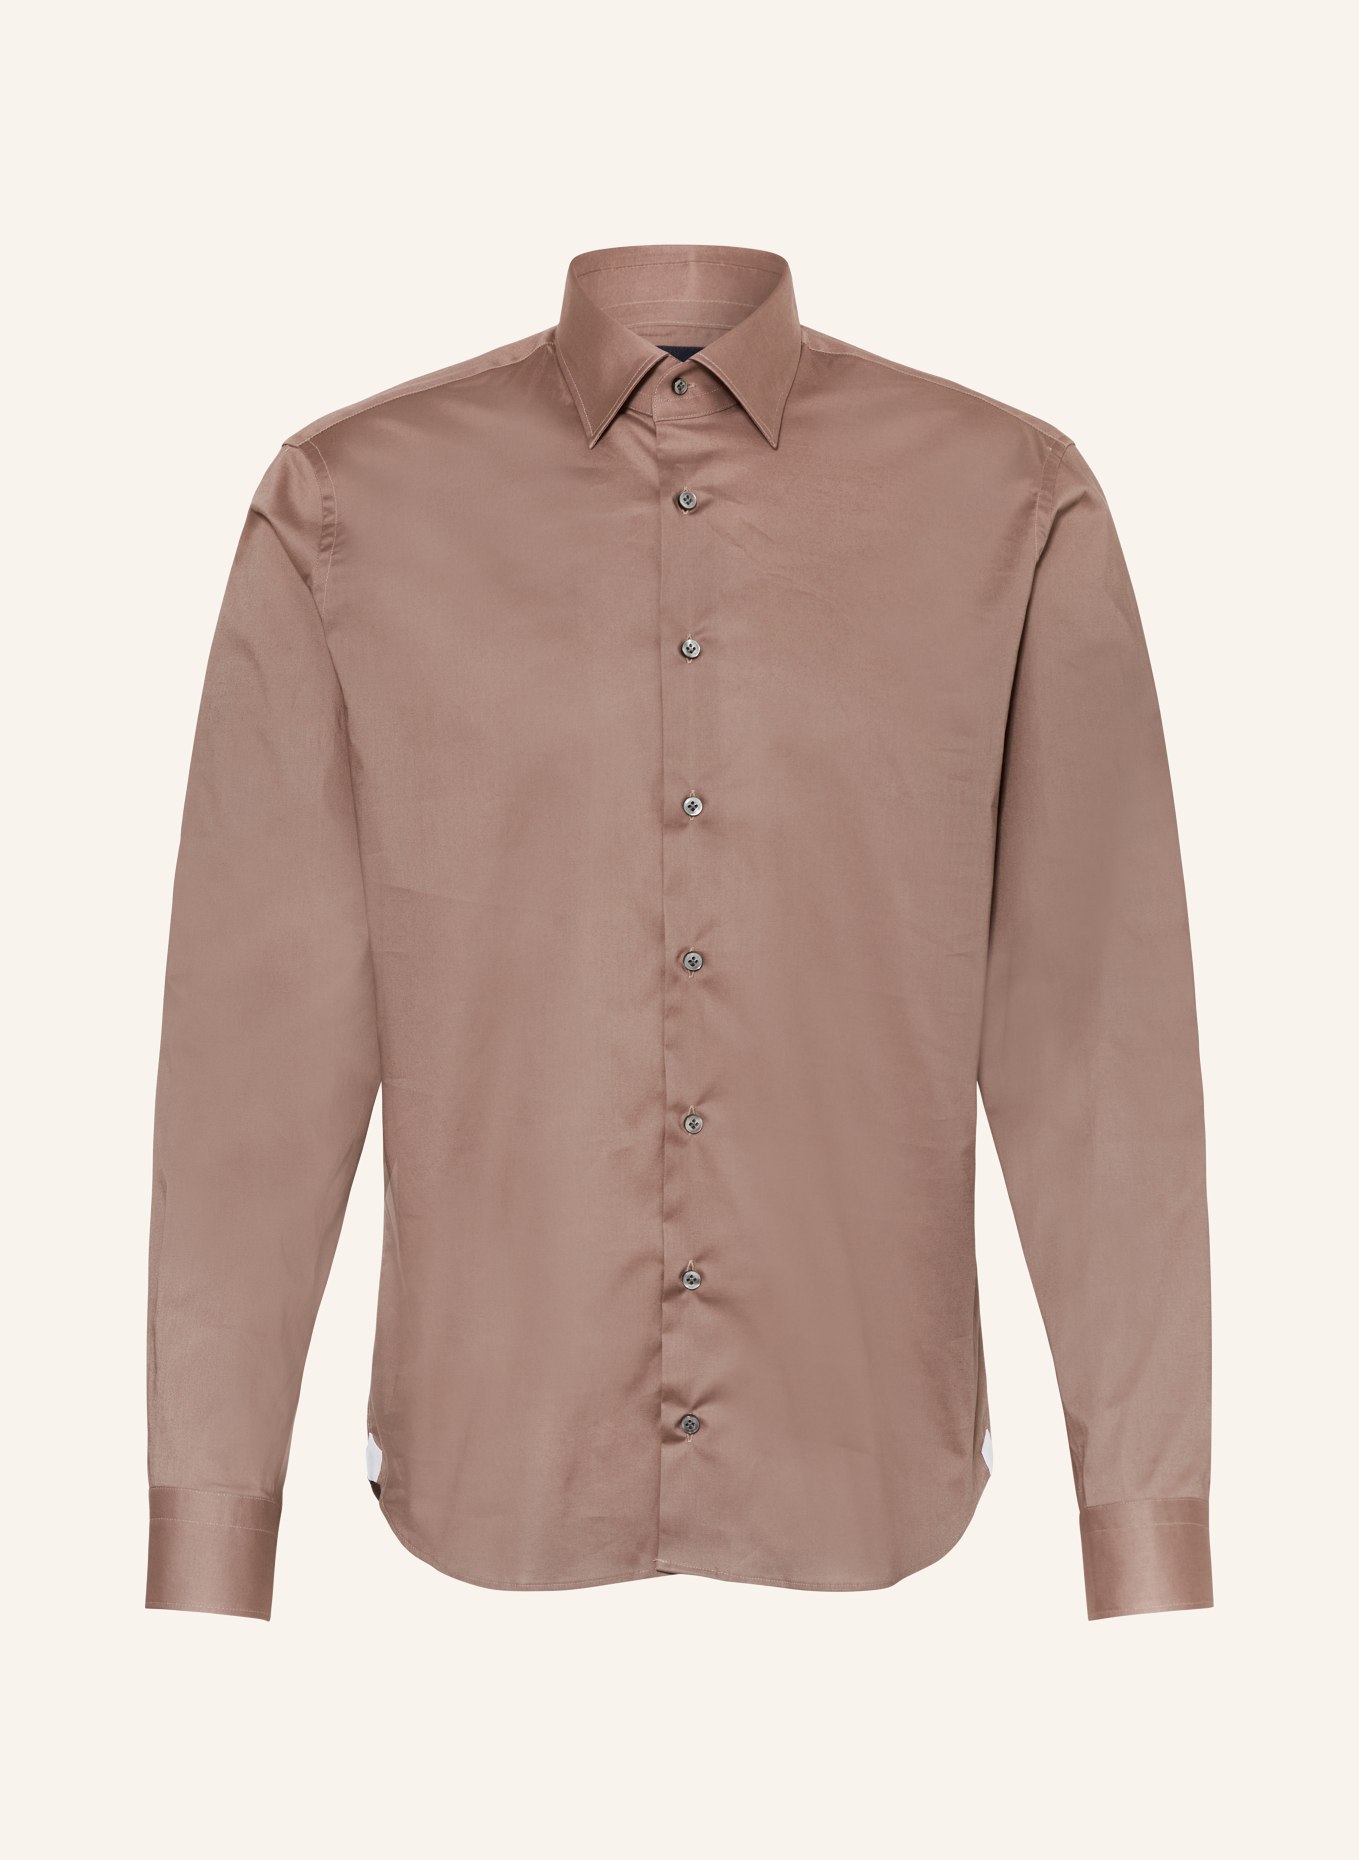 EDUARD DRESSLER Hemd Shaped Fit, Farbe: BRAUN (Bild 1)